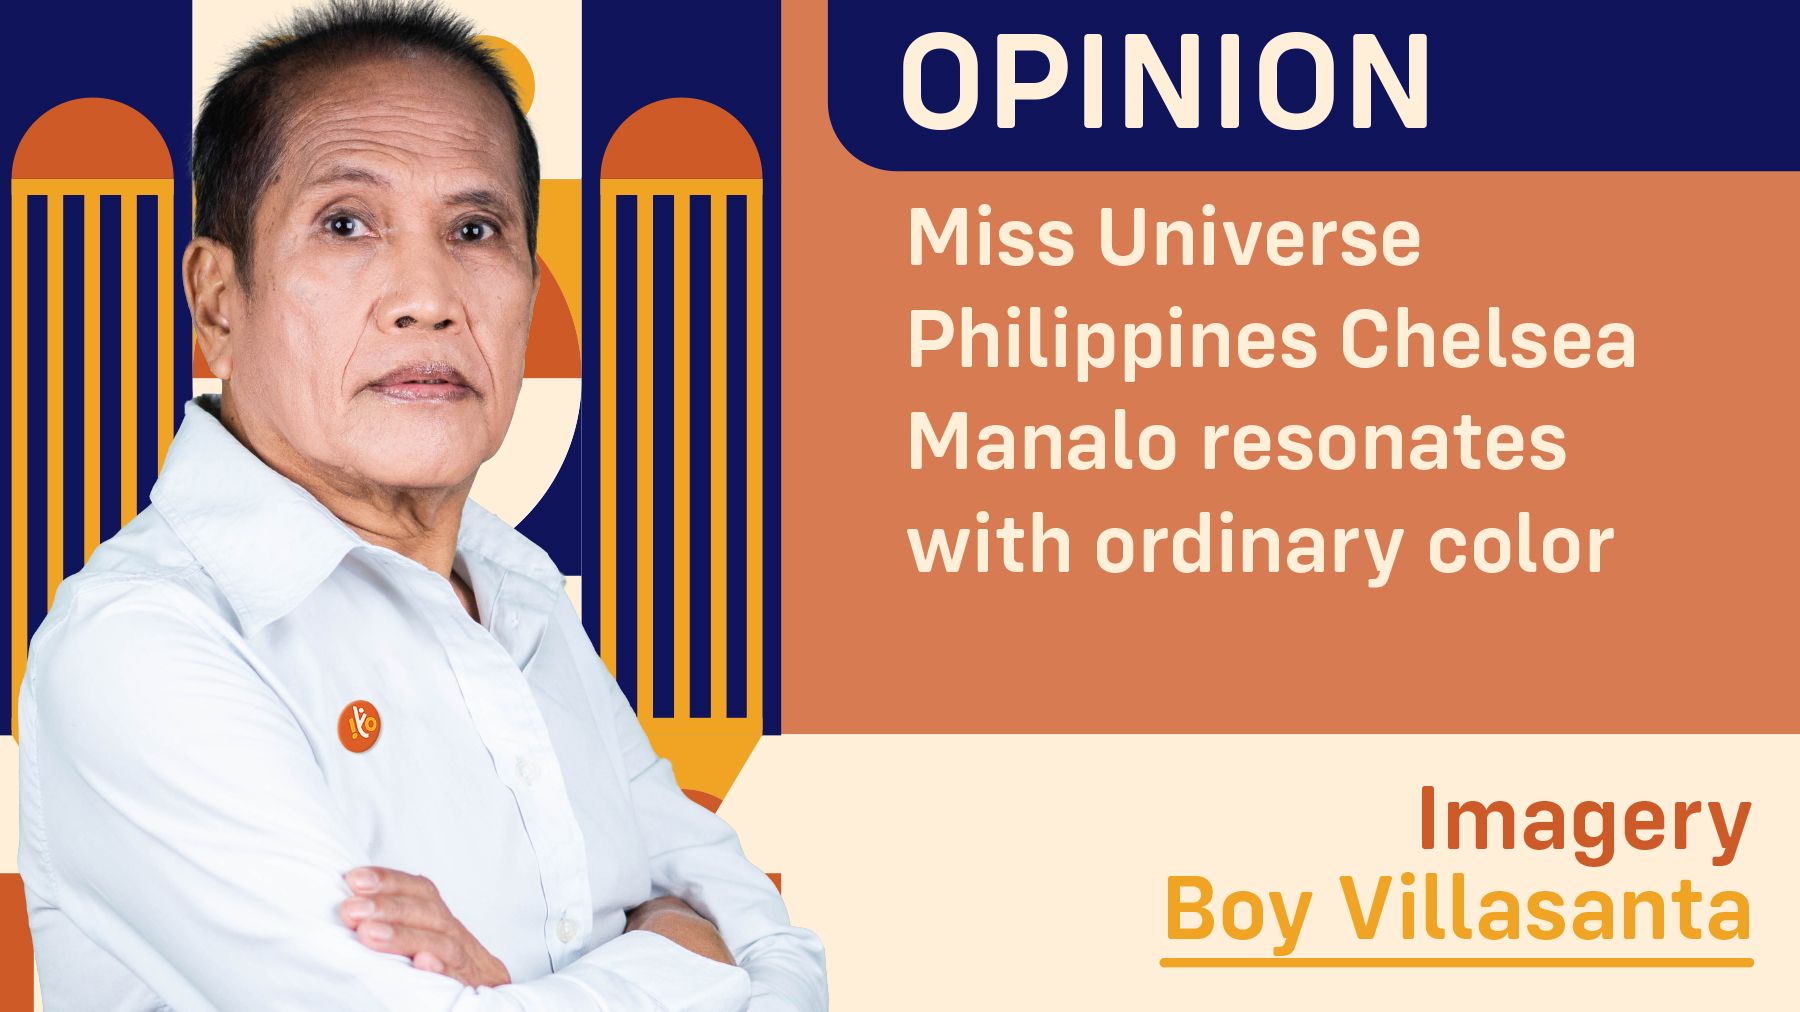 Miss Universe Philippines Chelsea Manalo resonates with ordinary color Filipino women